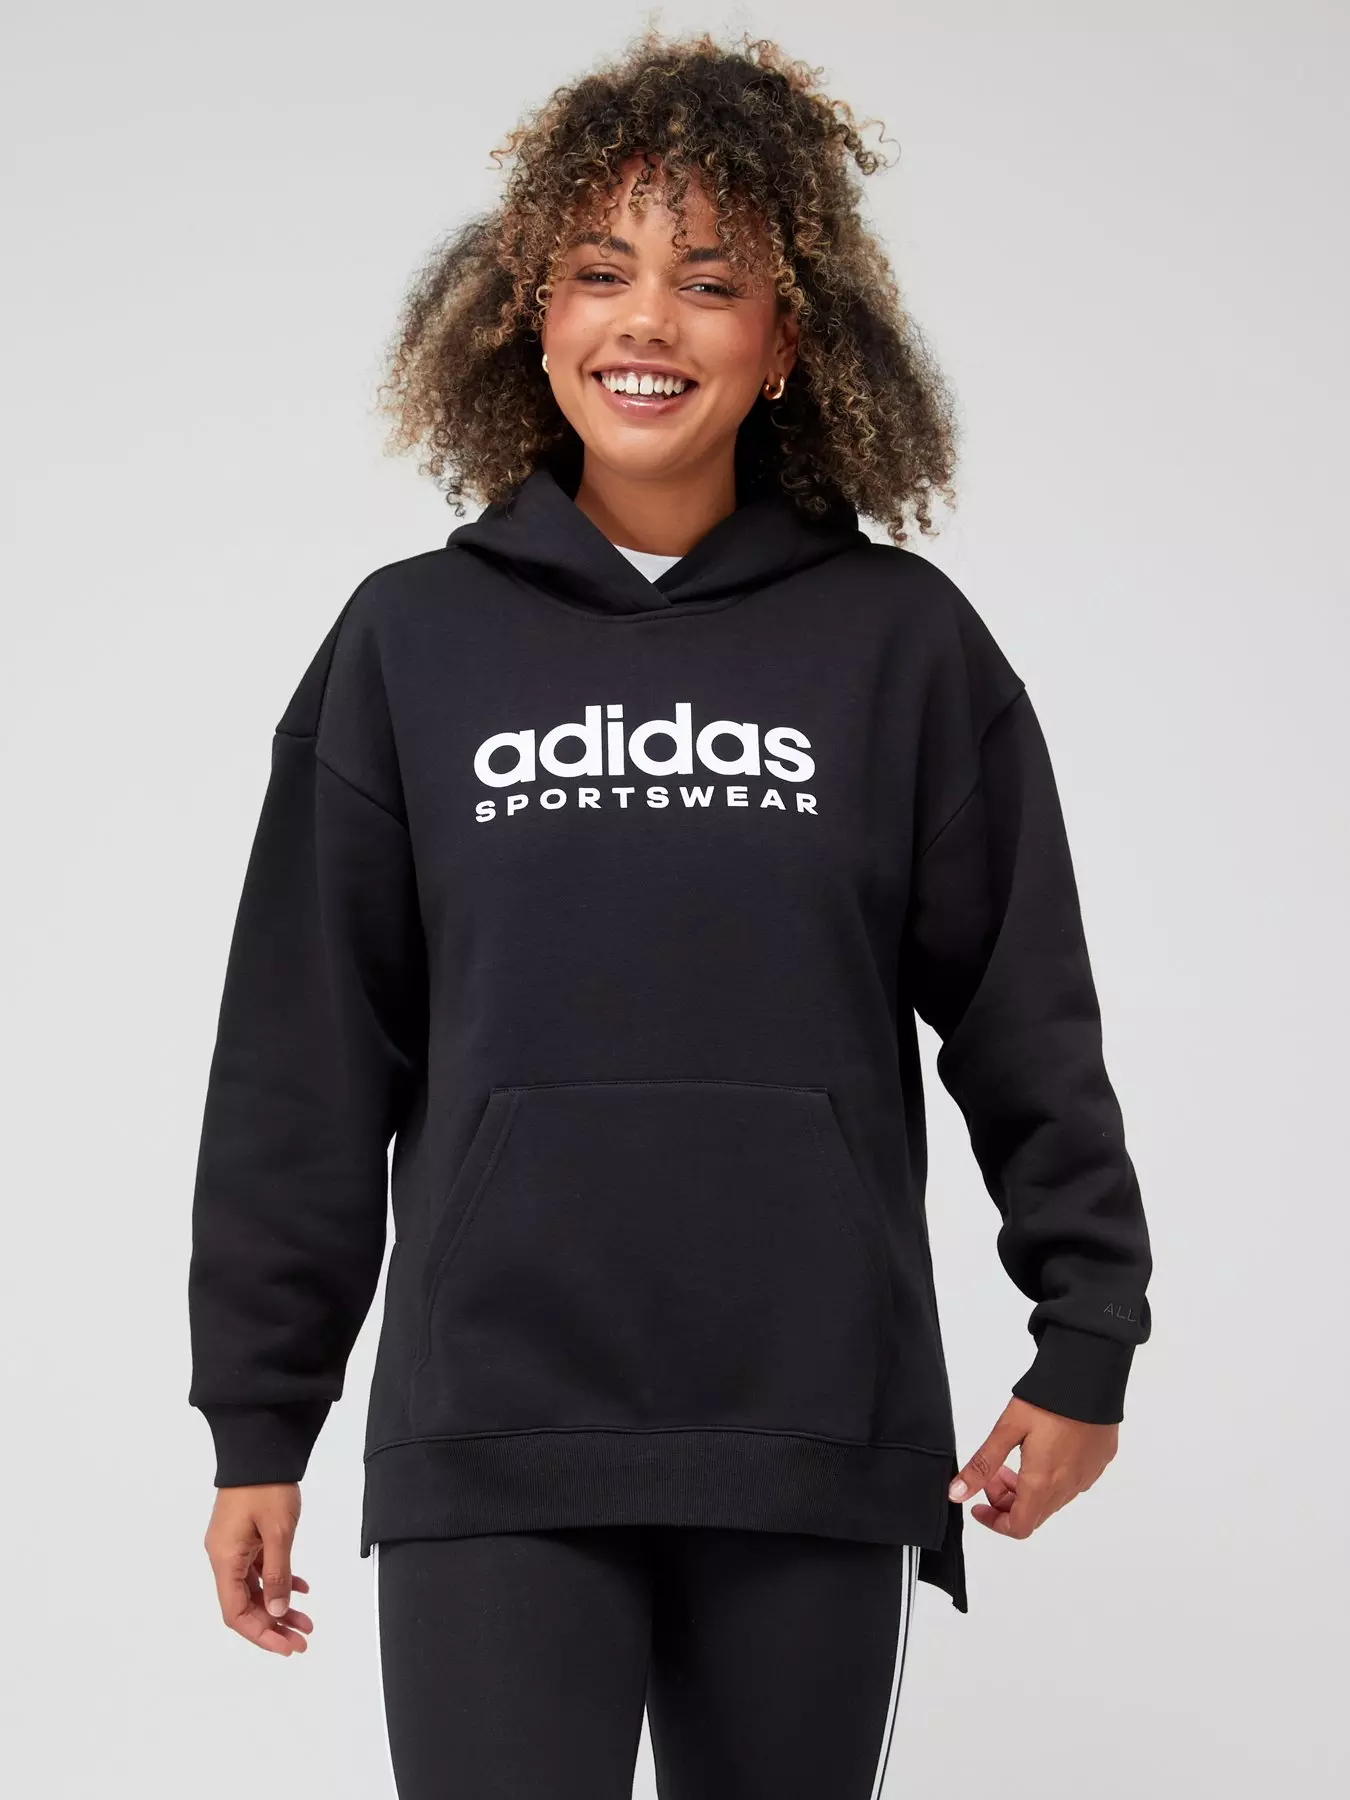 Hoodies | Ireland Women | Adidas | & Sportswear | Very sweatshirts